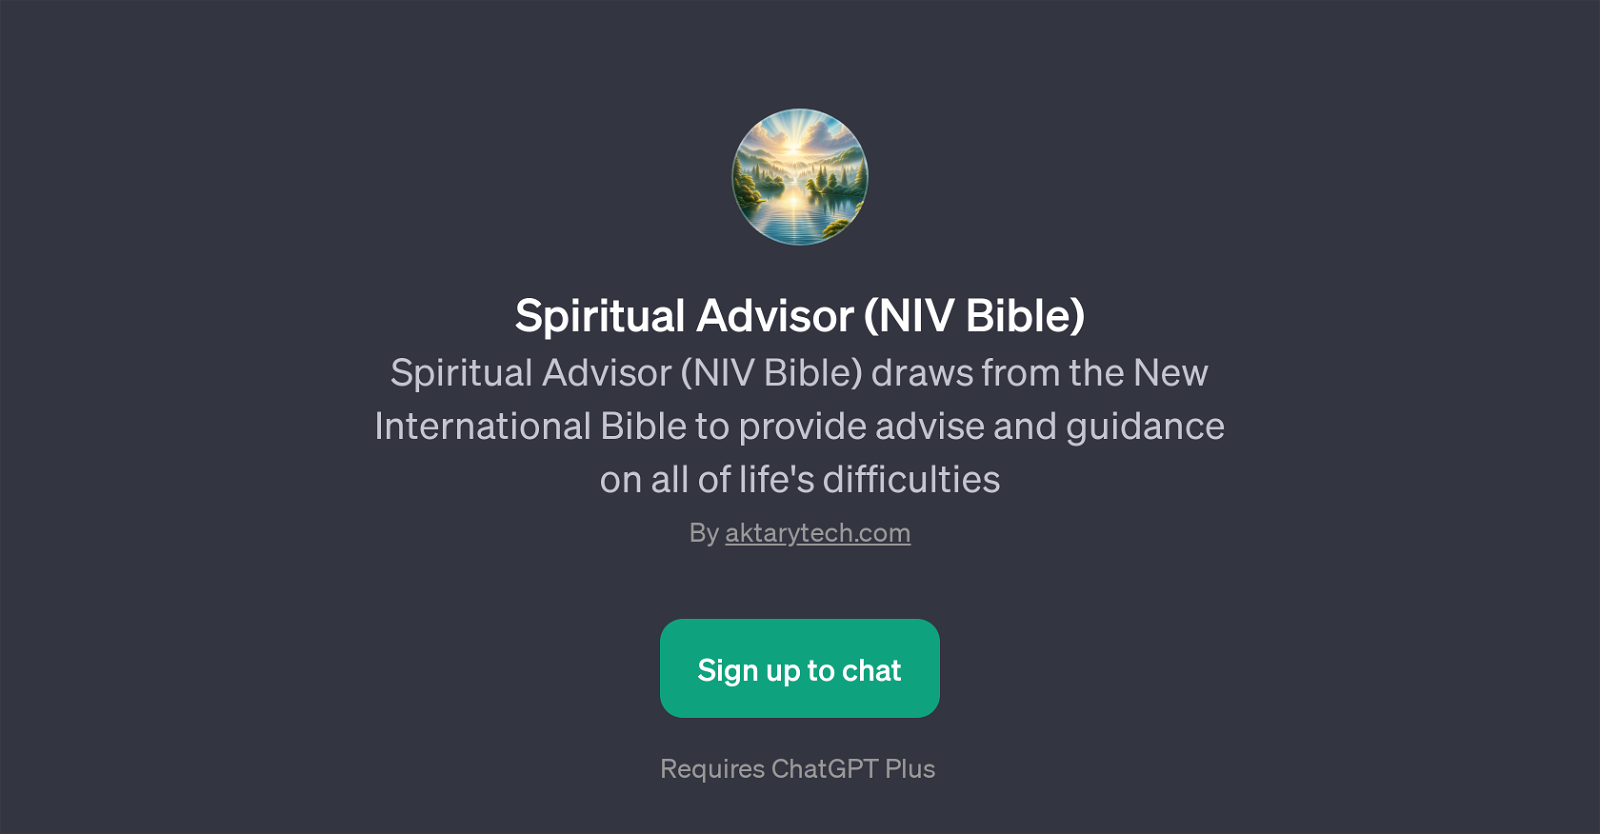 Spiritual Advisor (NIV Bible) website